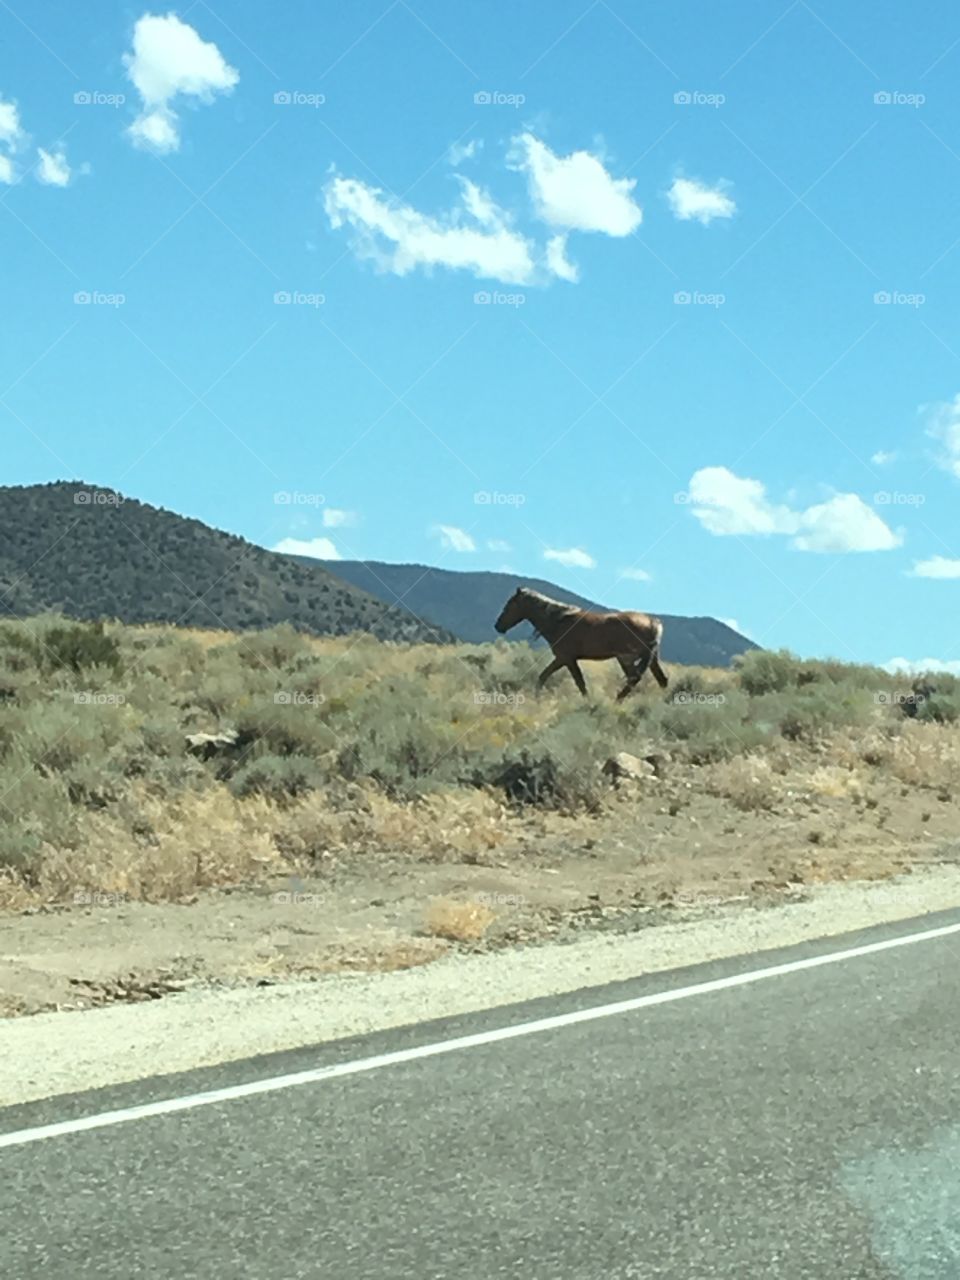 Wild Mustang, Virginia City Nevada 